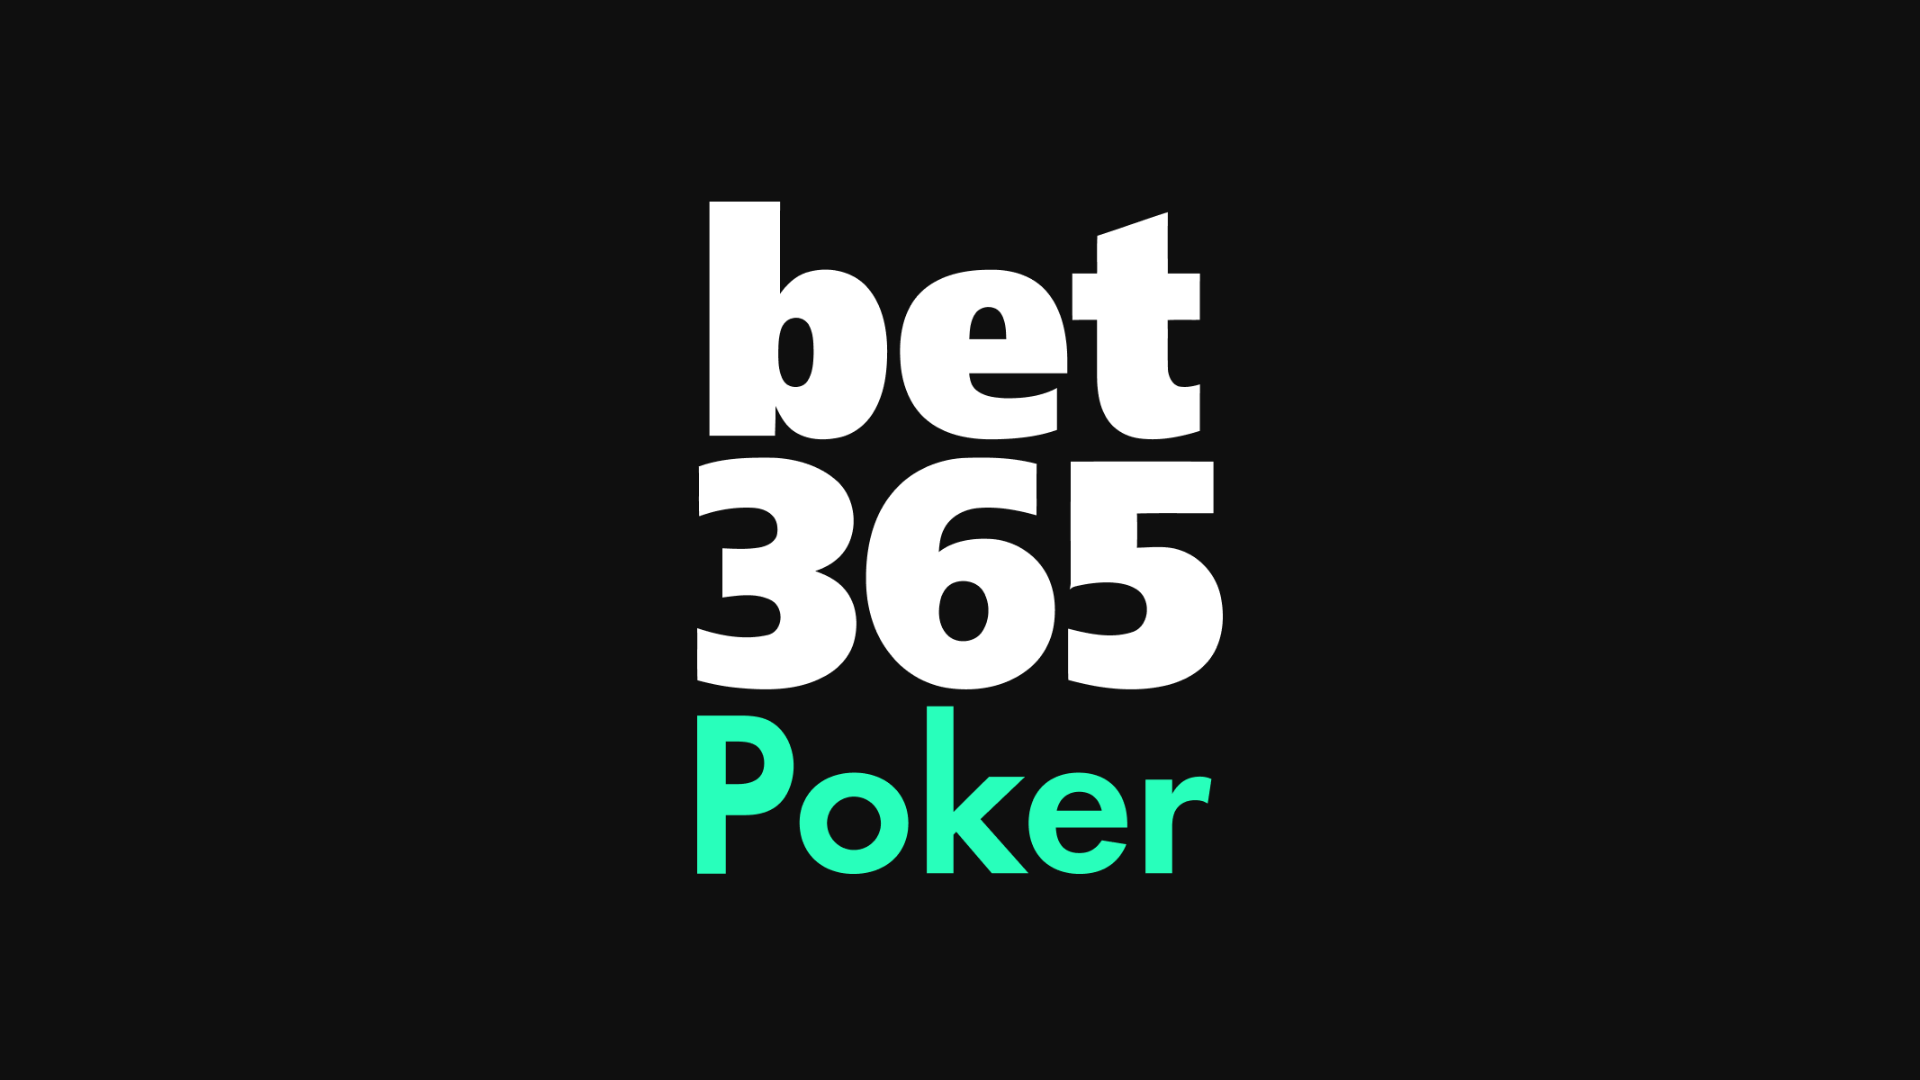 bet365 Poker Ireland €365 Bonus - Updated December 2023